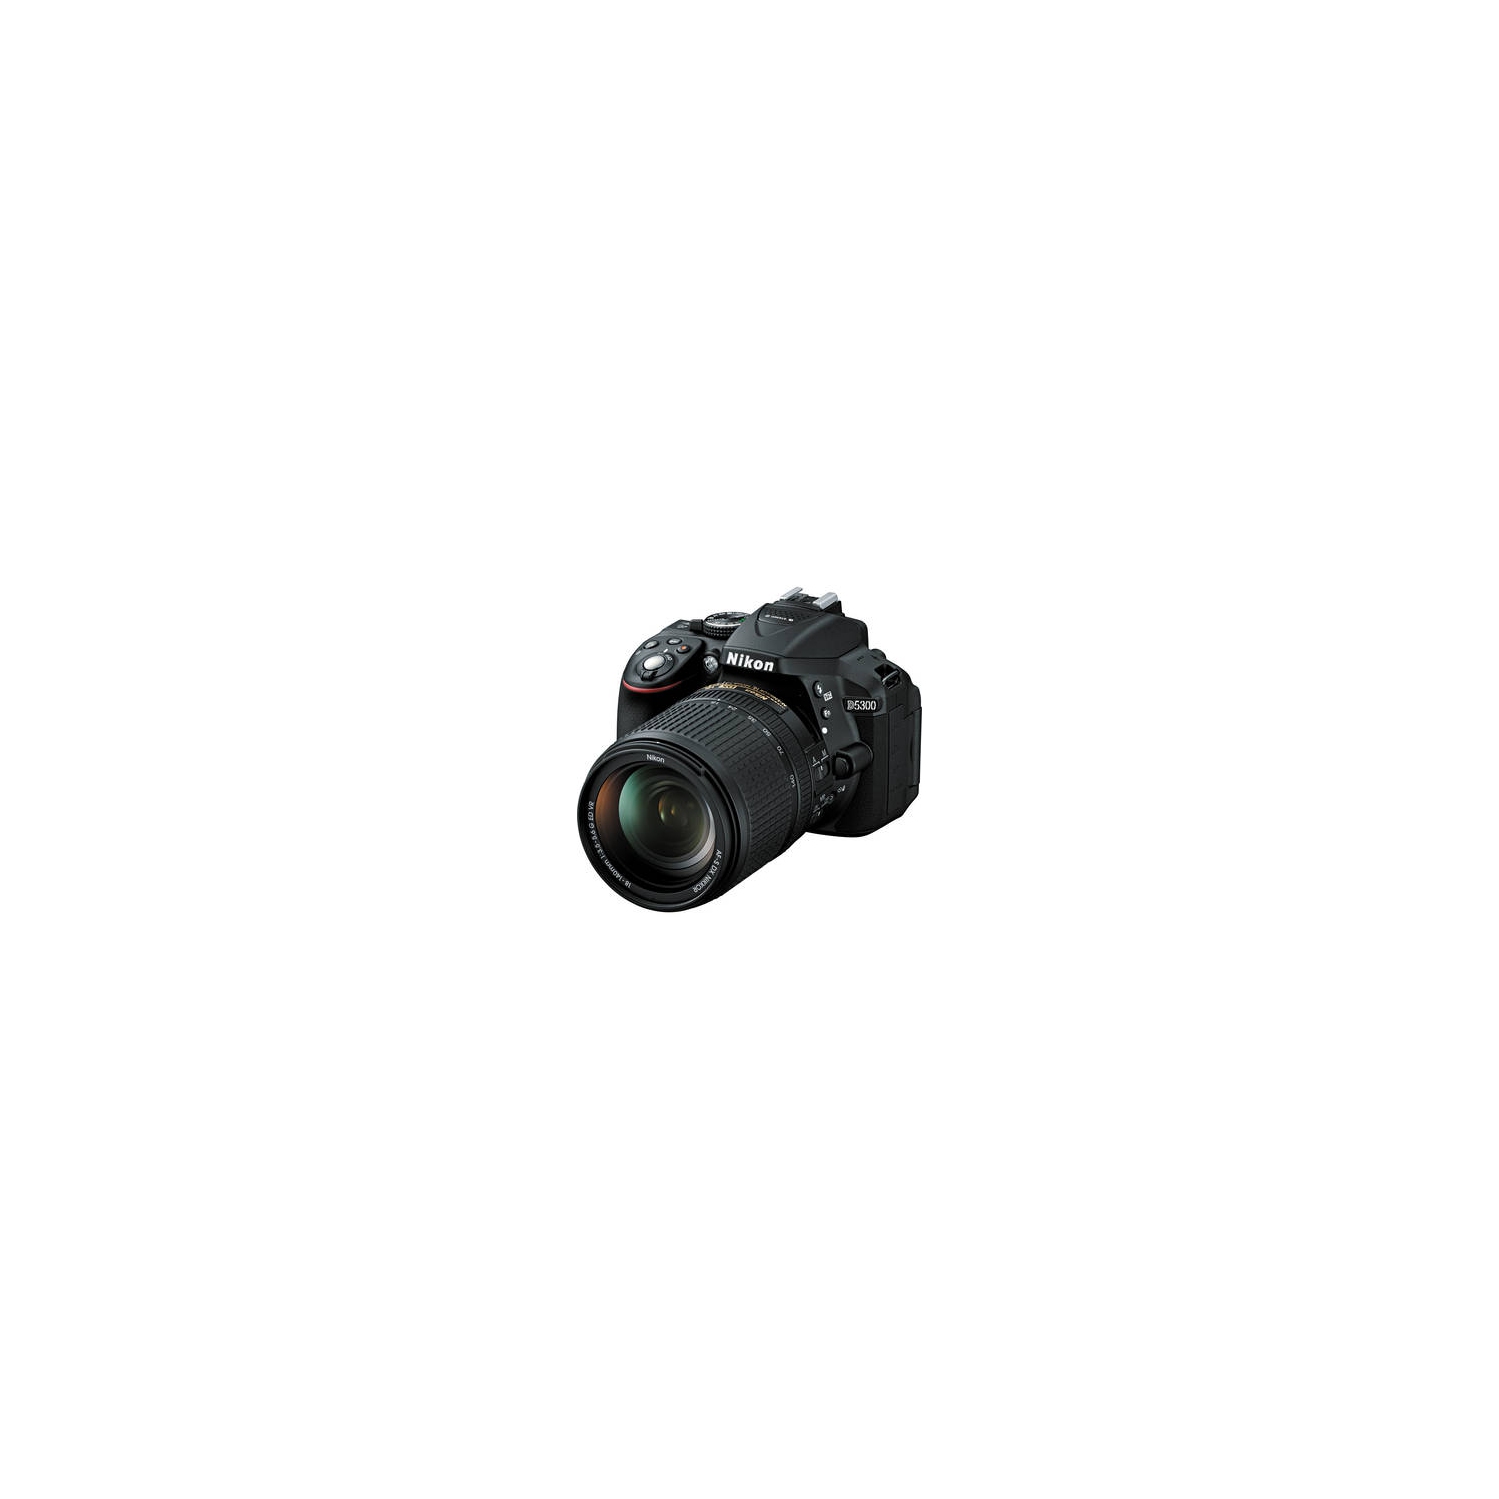 Nikon D5300 DSLR Camera w/Nikon 18-140mm Lens - Black - US Version w/ Seller Warranty